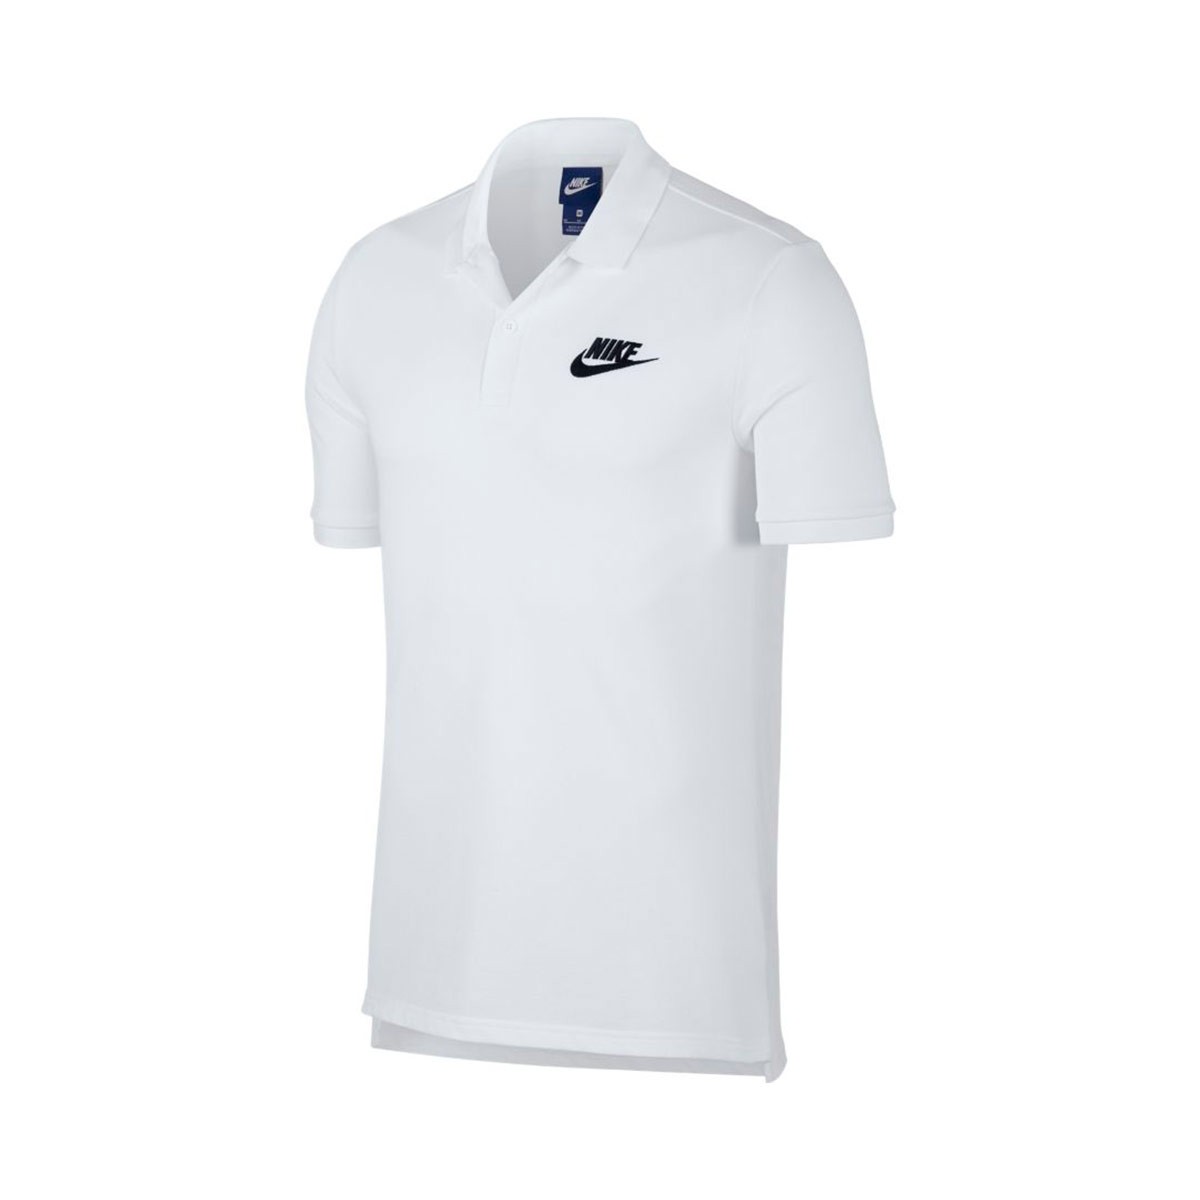 Polo shirt Nike Sportswear 2019 White 